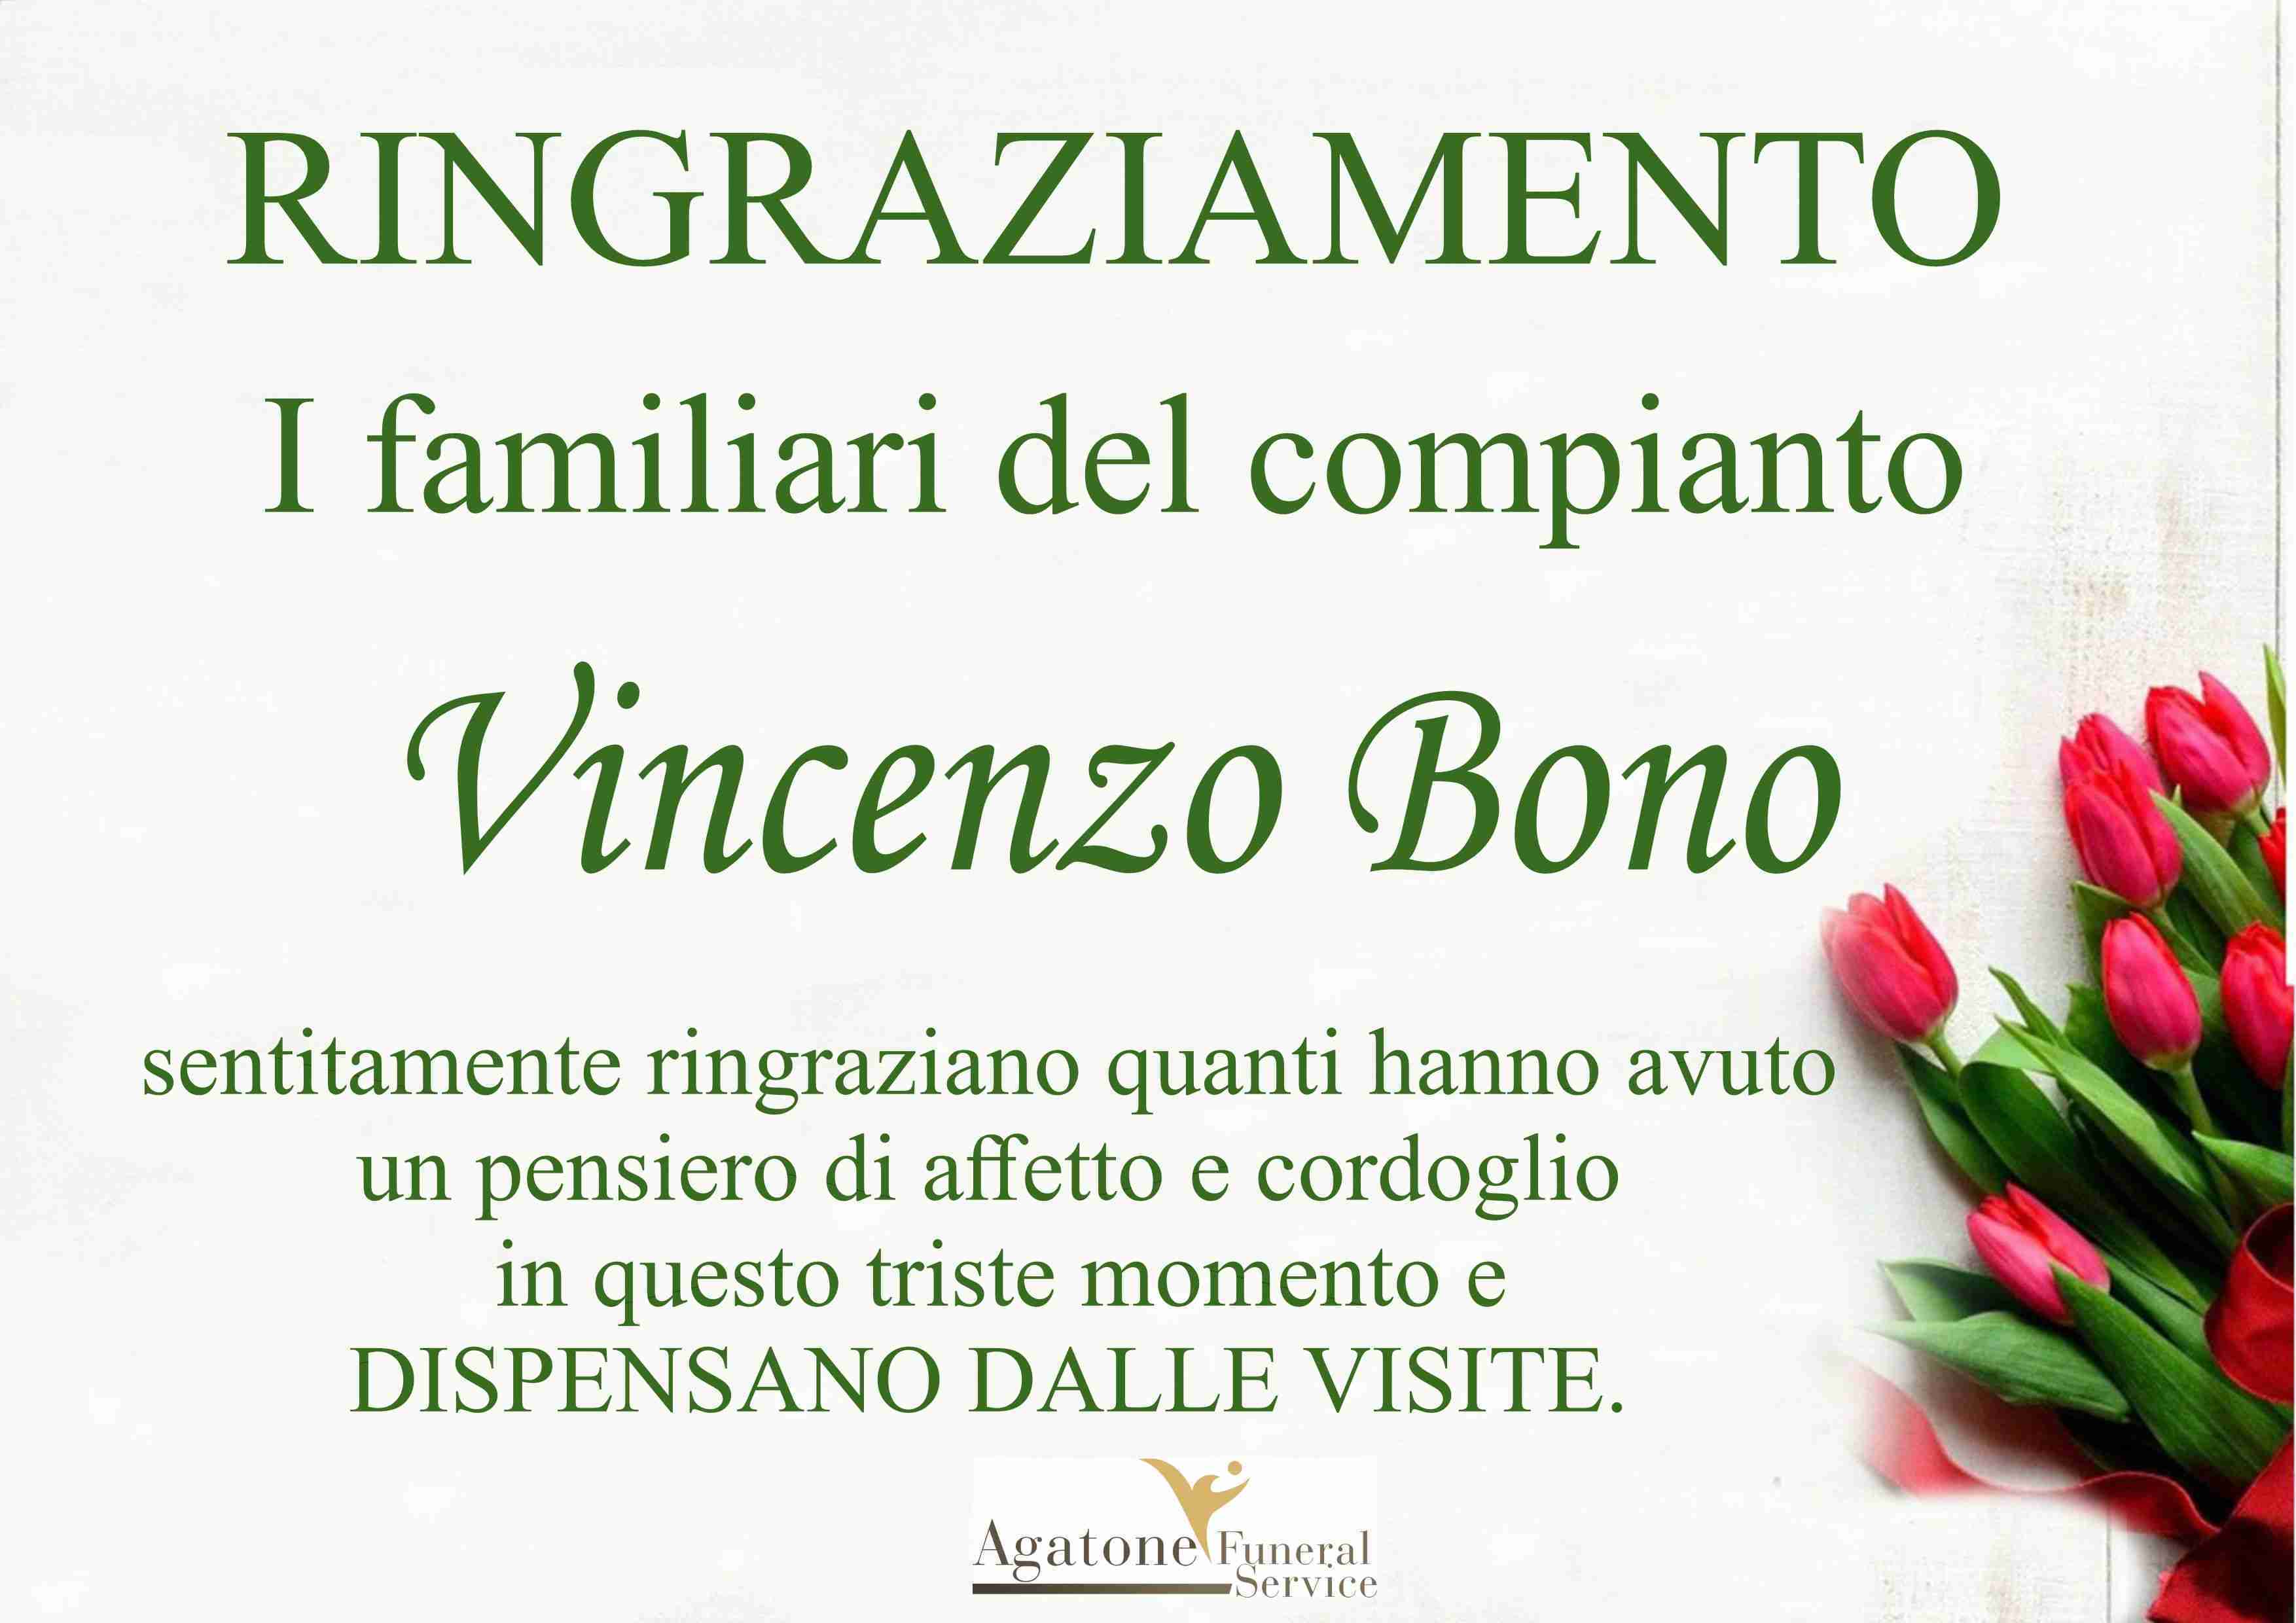 Vincenzo Bono